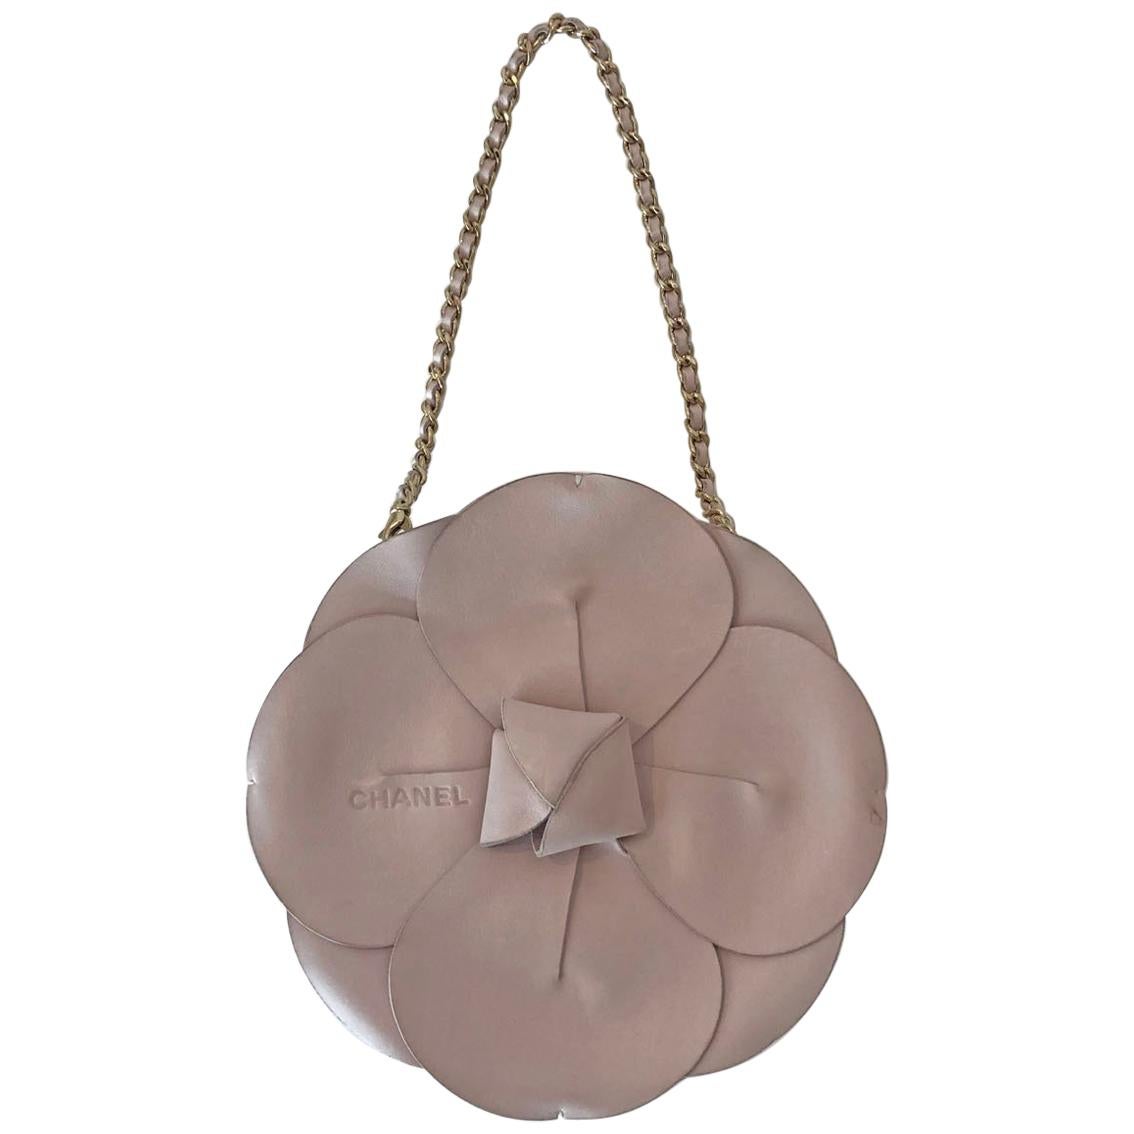 2002/2003 Chanel Blush Leather Camellia Evening Bag